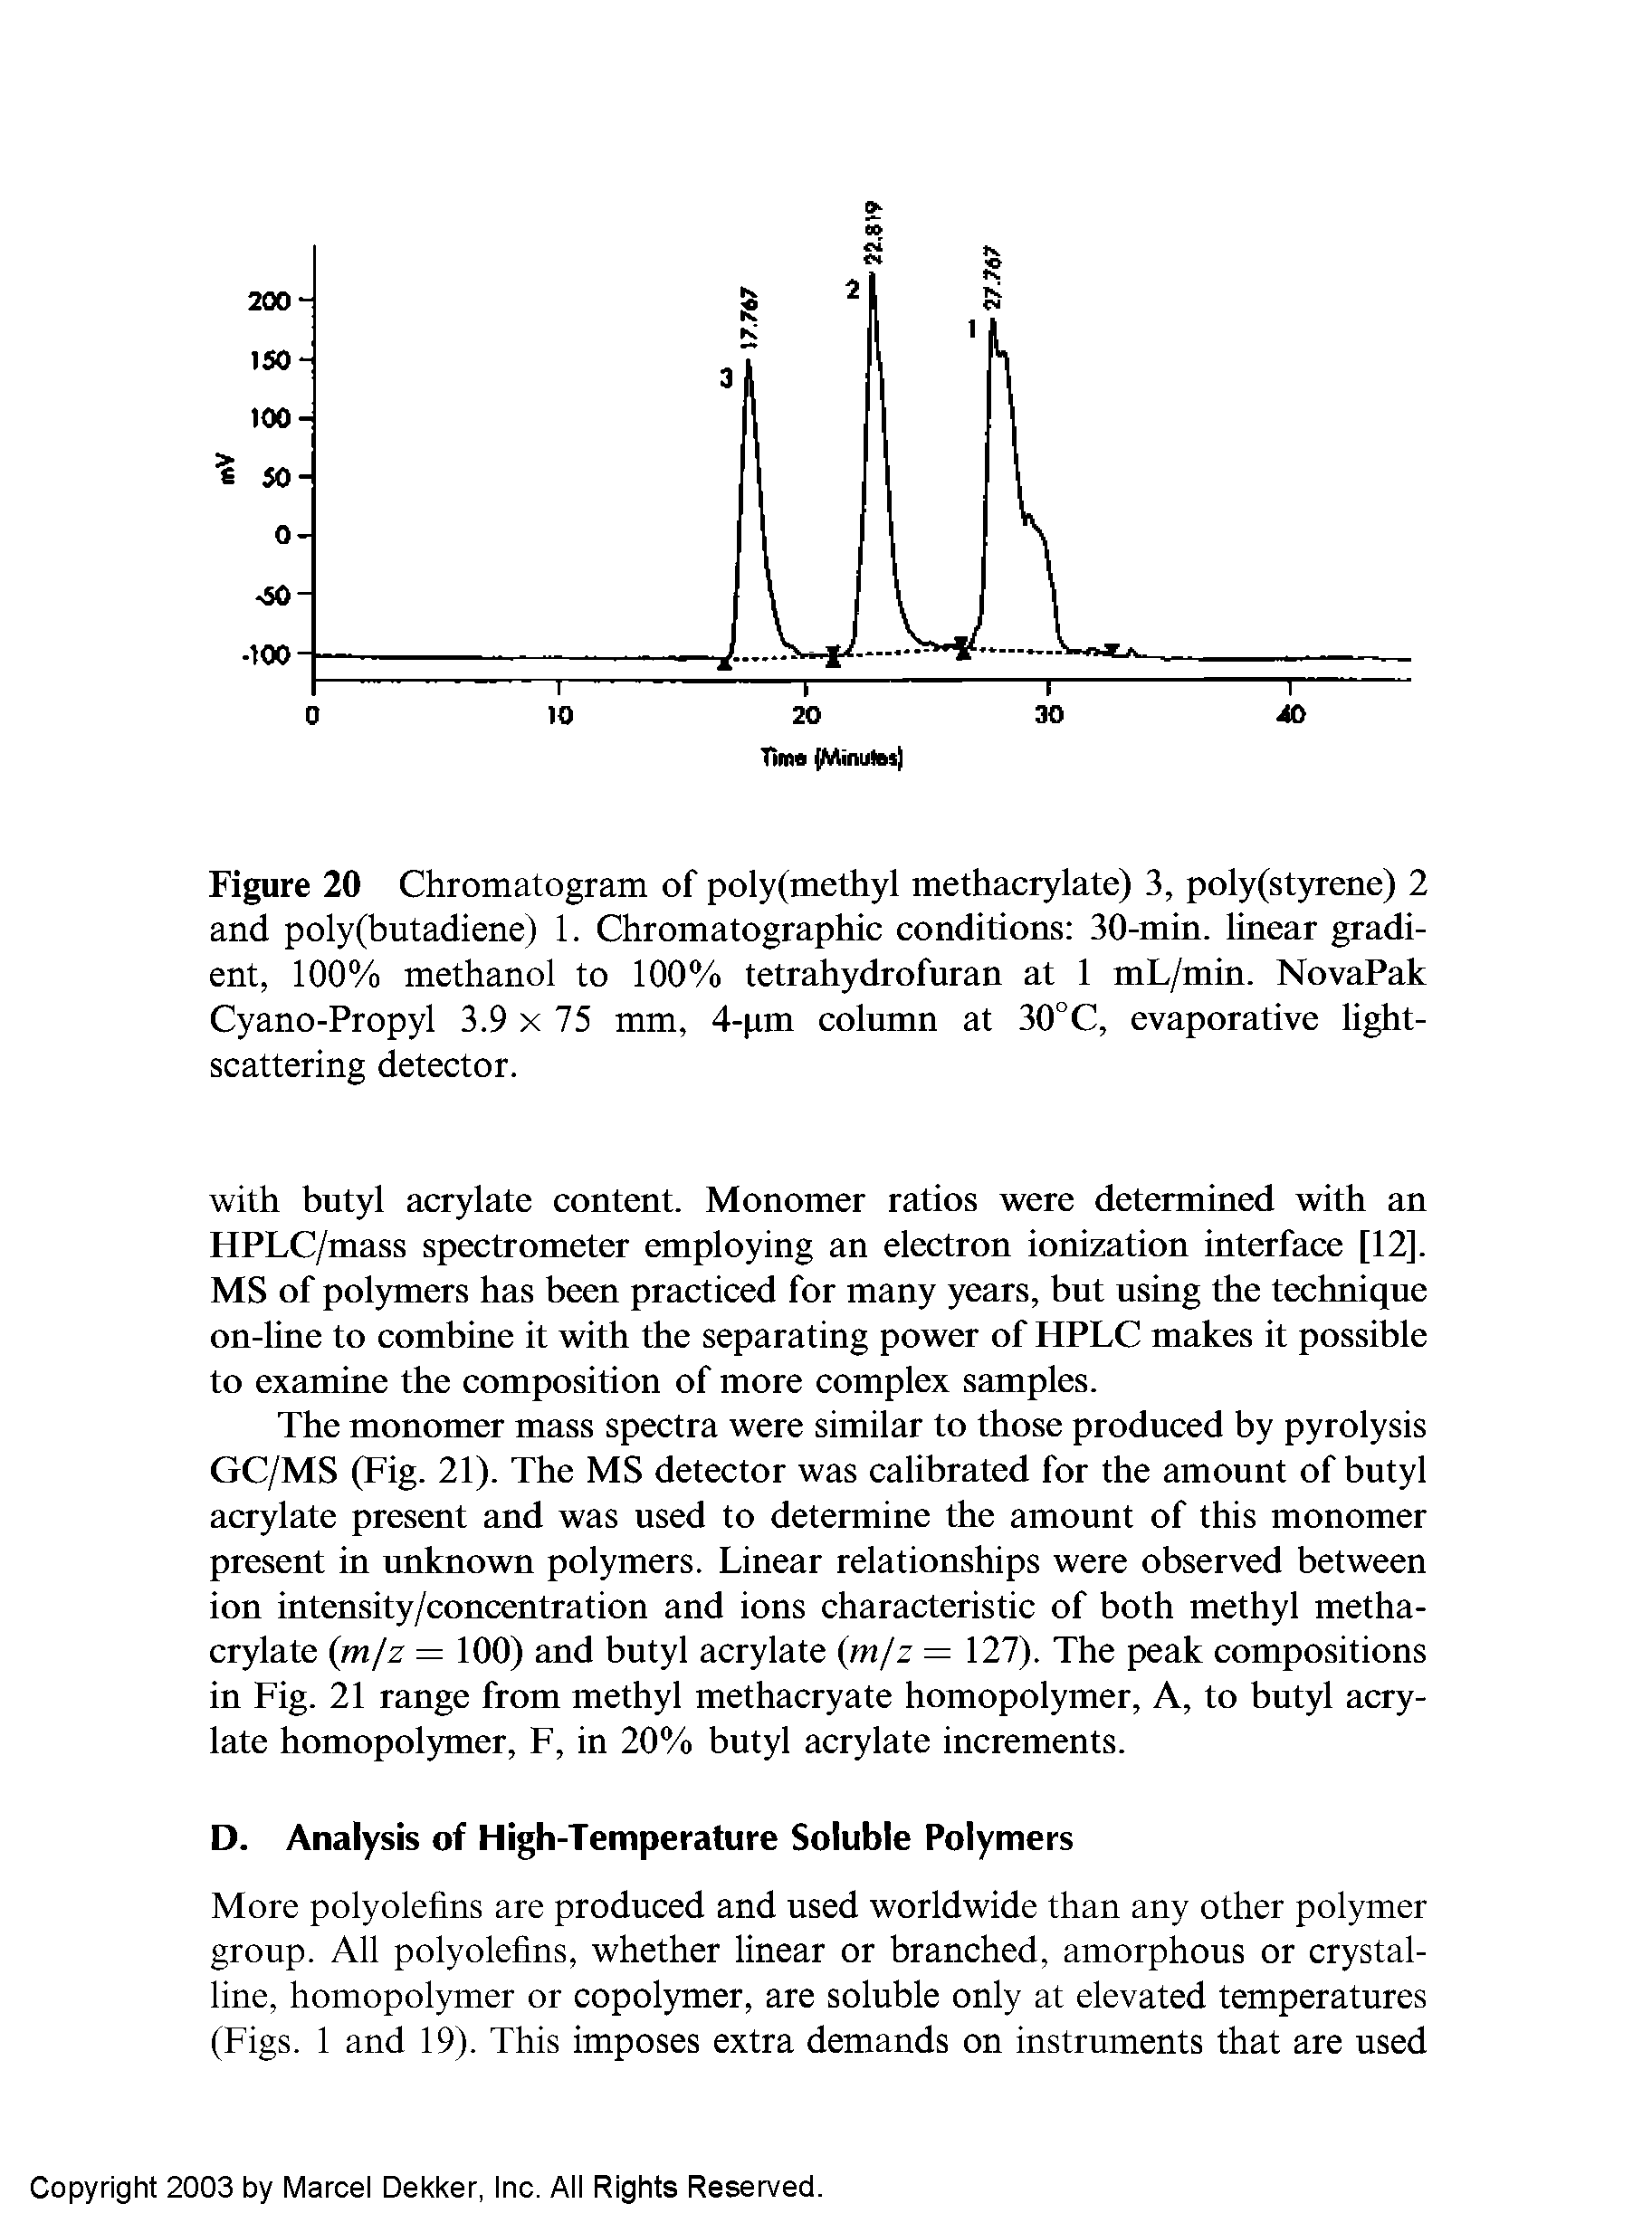 Figure 20 Chromatogram of poly(methyl methacrylate) 3, poly(styrene) 2 and poly(butadiene) 1. Chromatographic conditions 30-min. linear gradient, 100% methanol to 100% tetrahydrofuran at 1 mL/min. NovaPak Cyano-Propyl 3.9 x 75 mm, 4-pm column at 30°C, evaporative lightscattering detector.